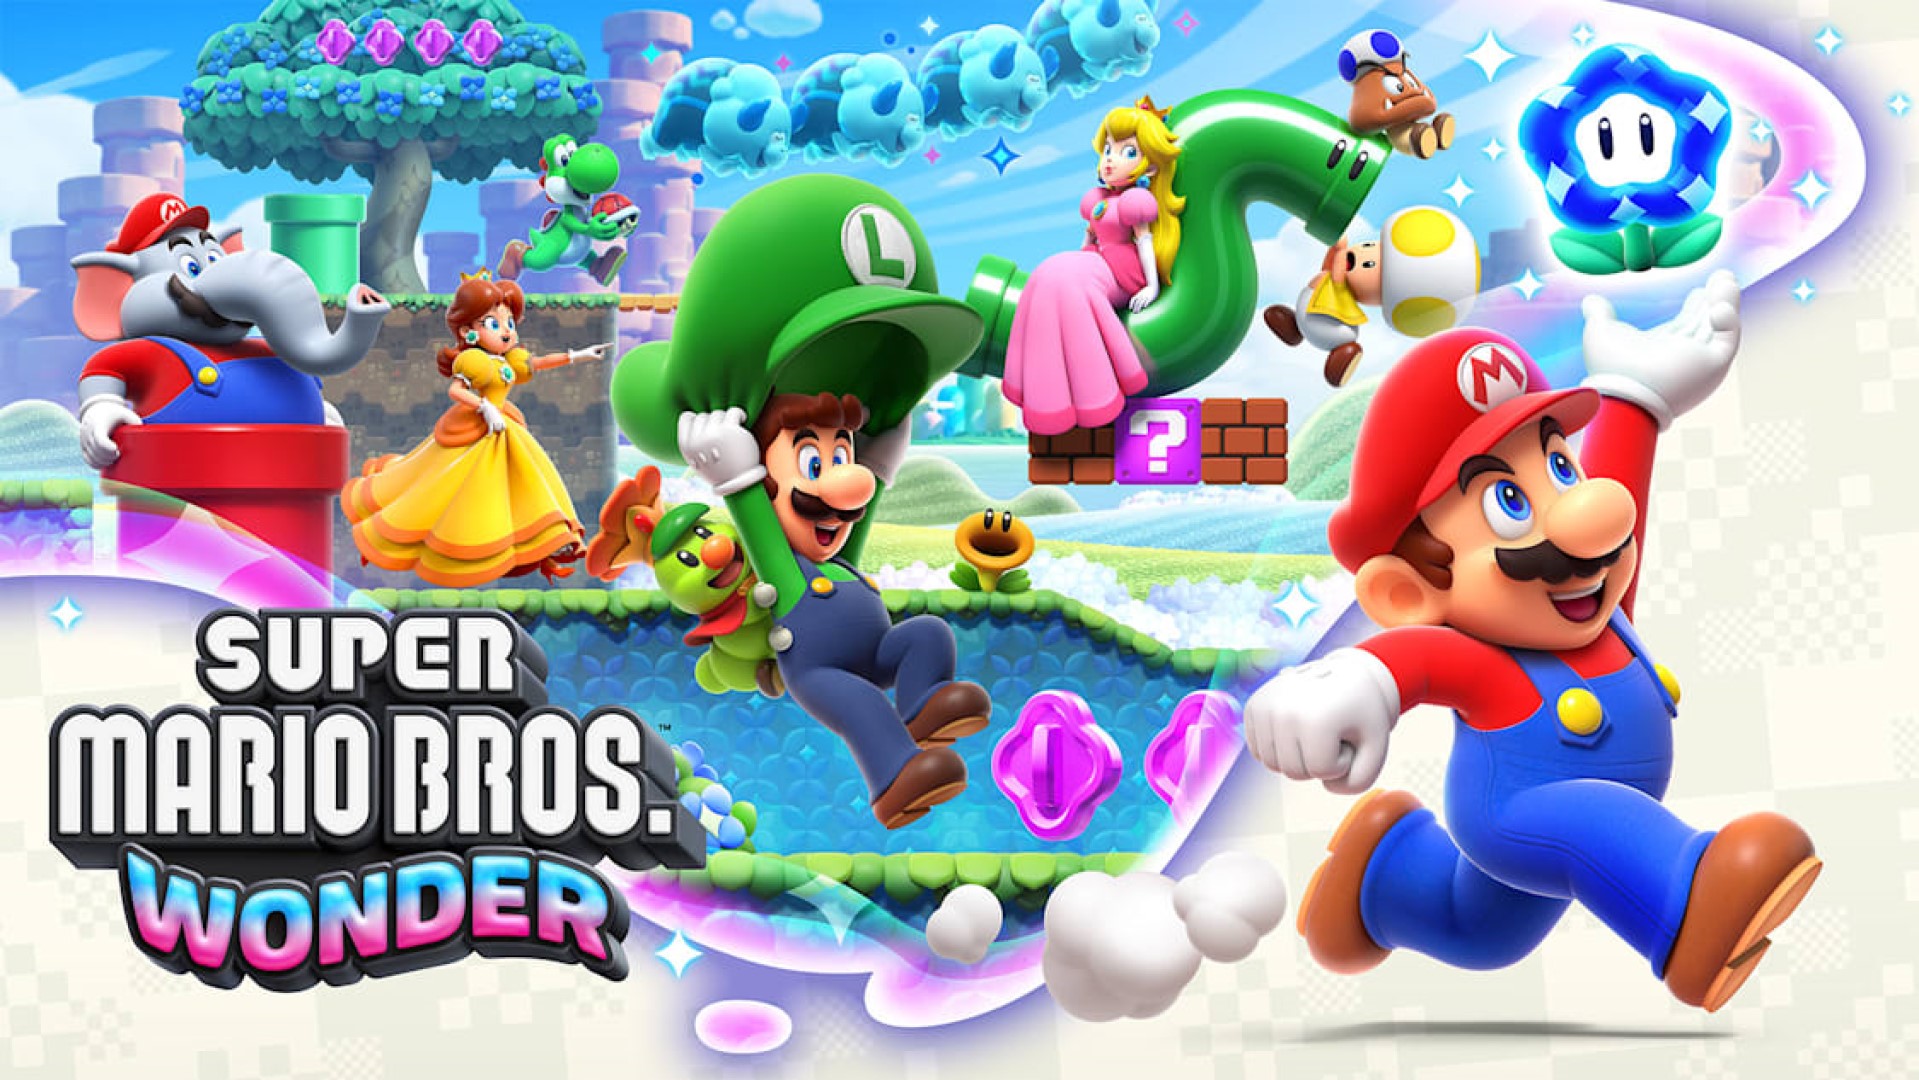 Super Mario Bros. Wonder در صدر جدول فروش هفتگی ژاپن قرار گرفت